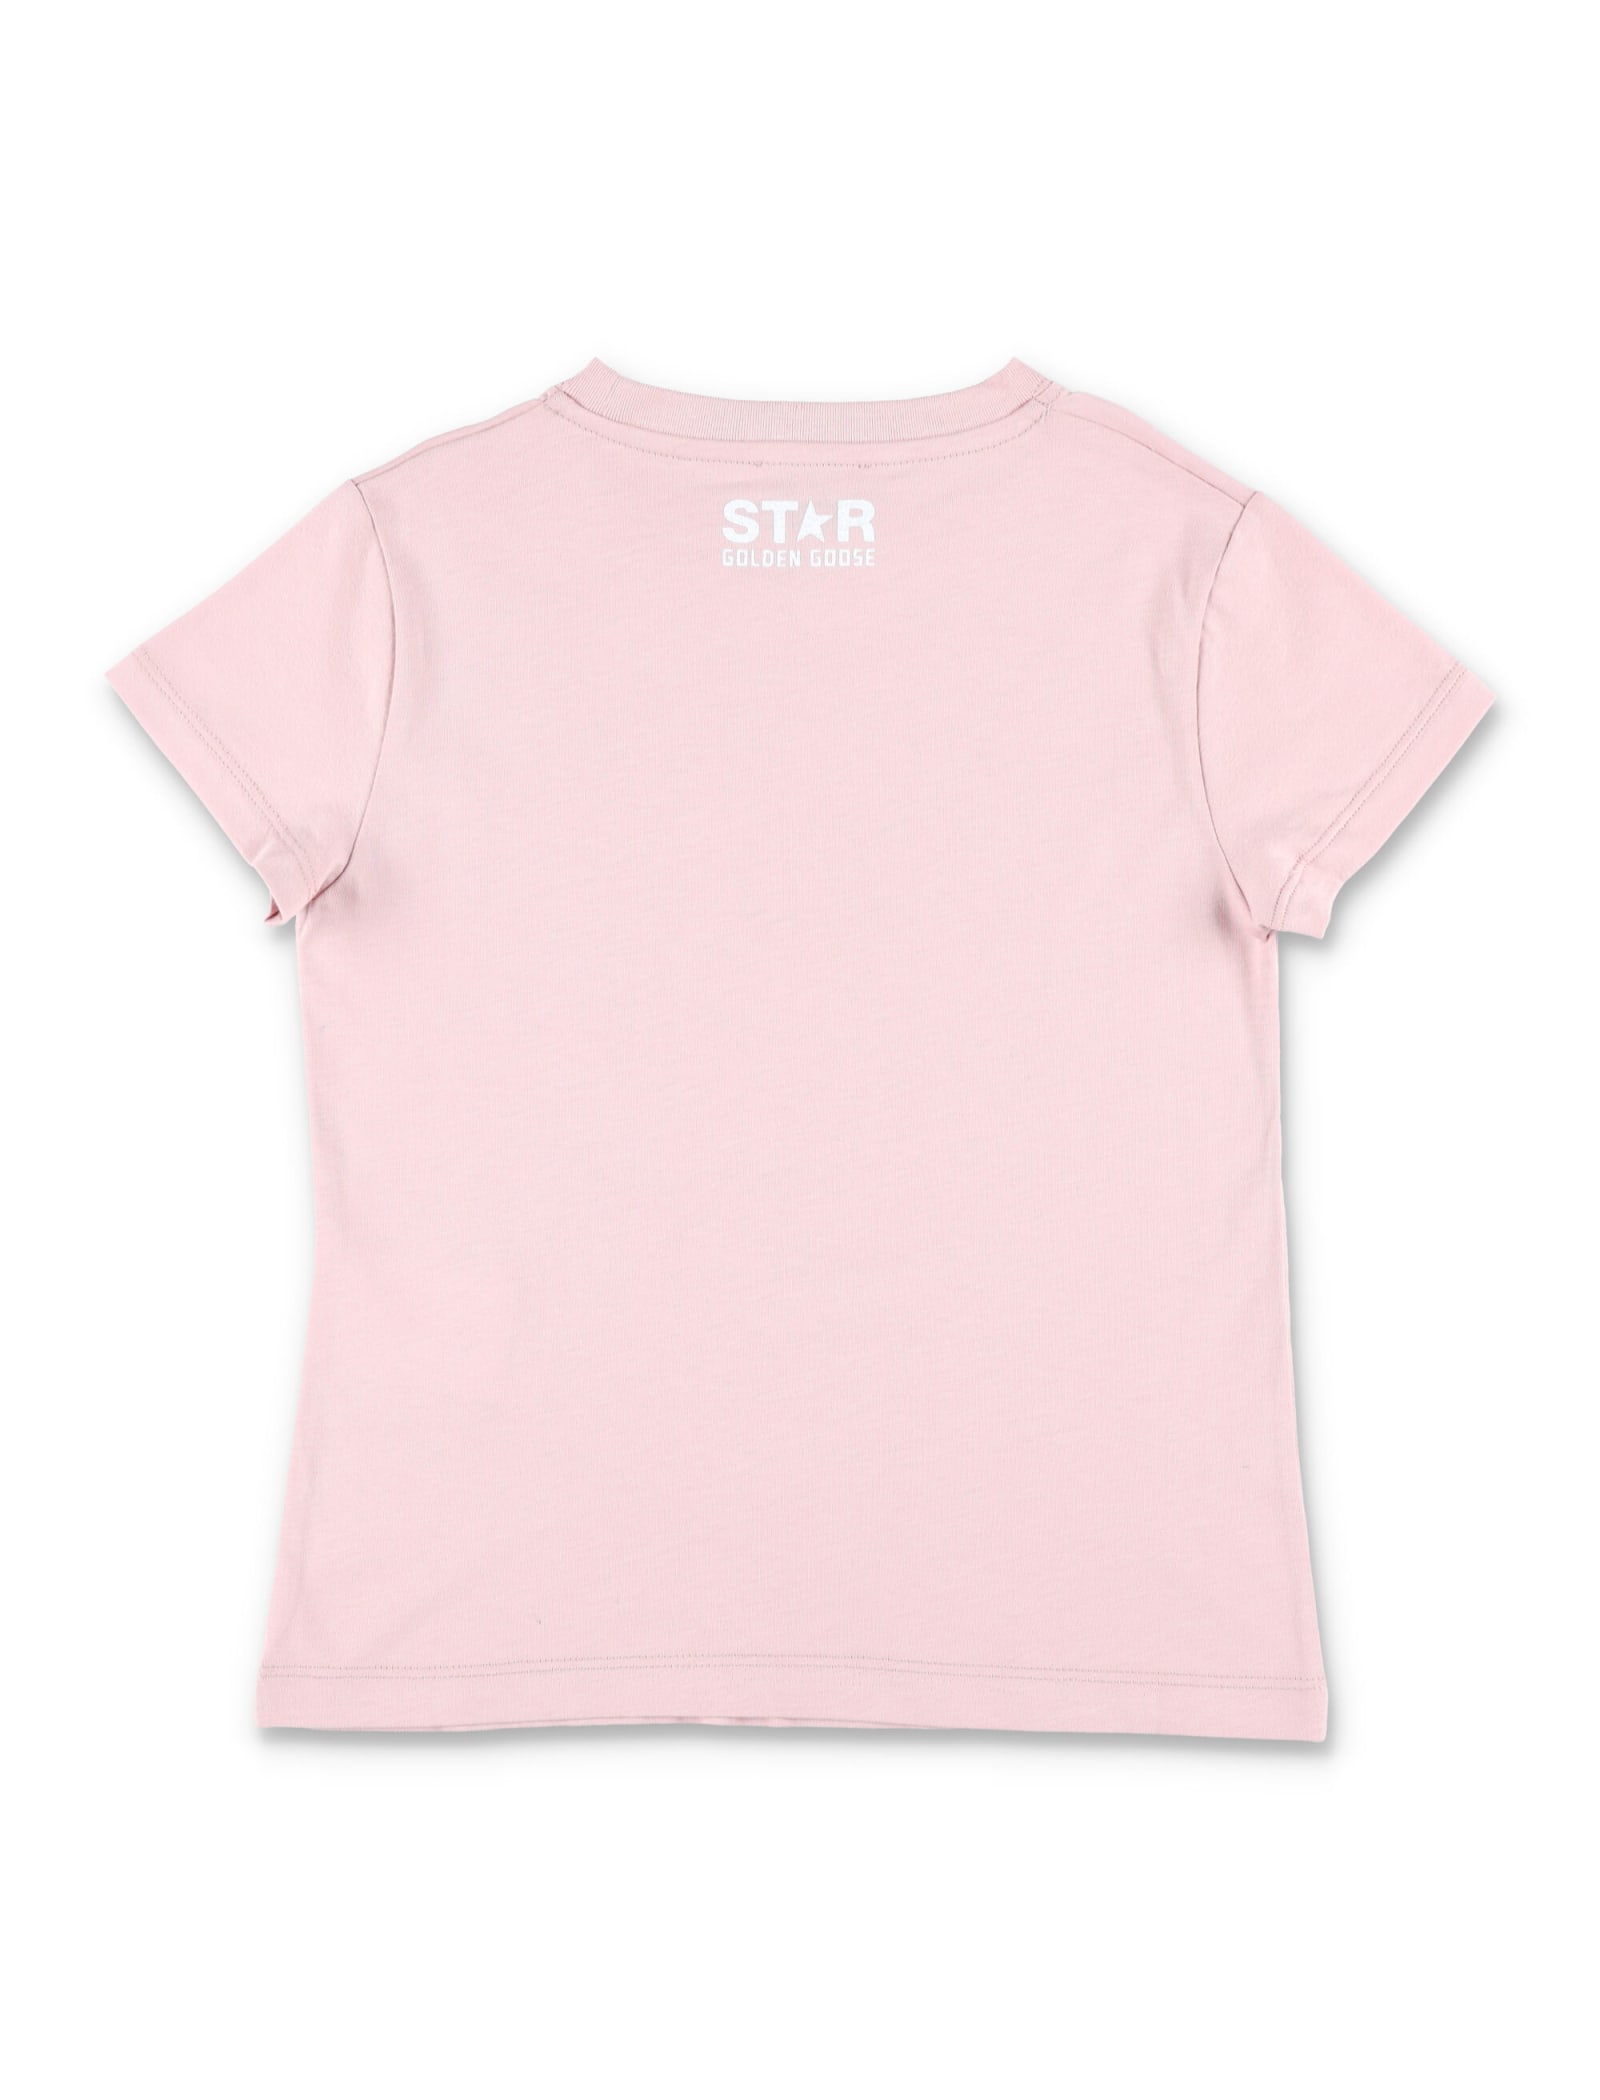 Shop Golden Goose Glitter Star T-shirt In Pink/white